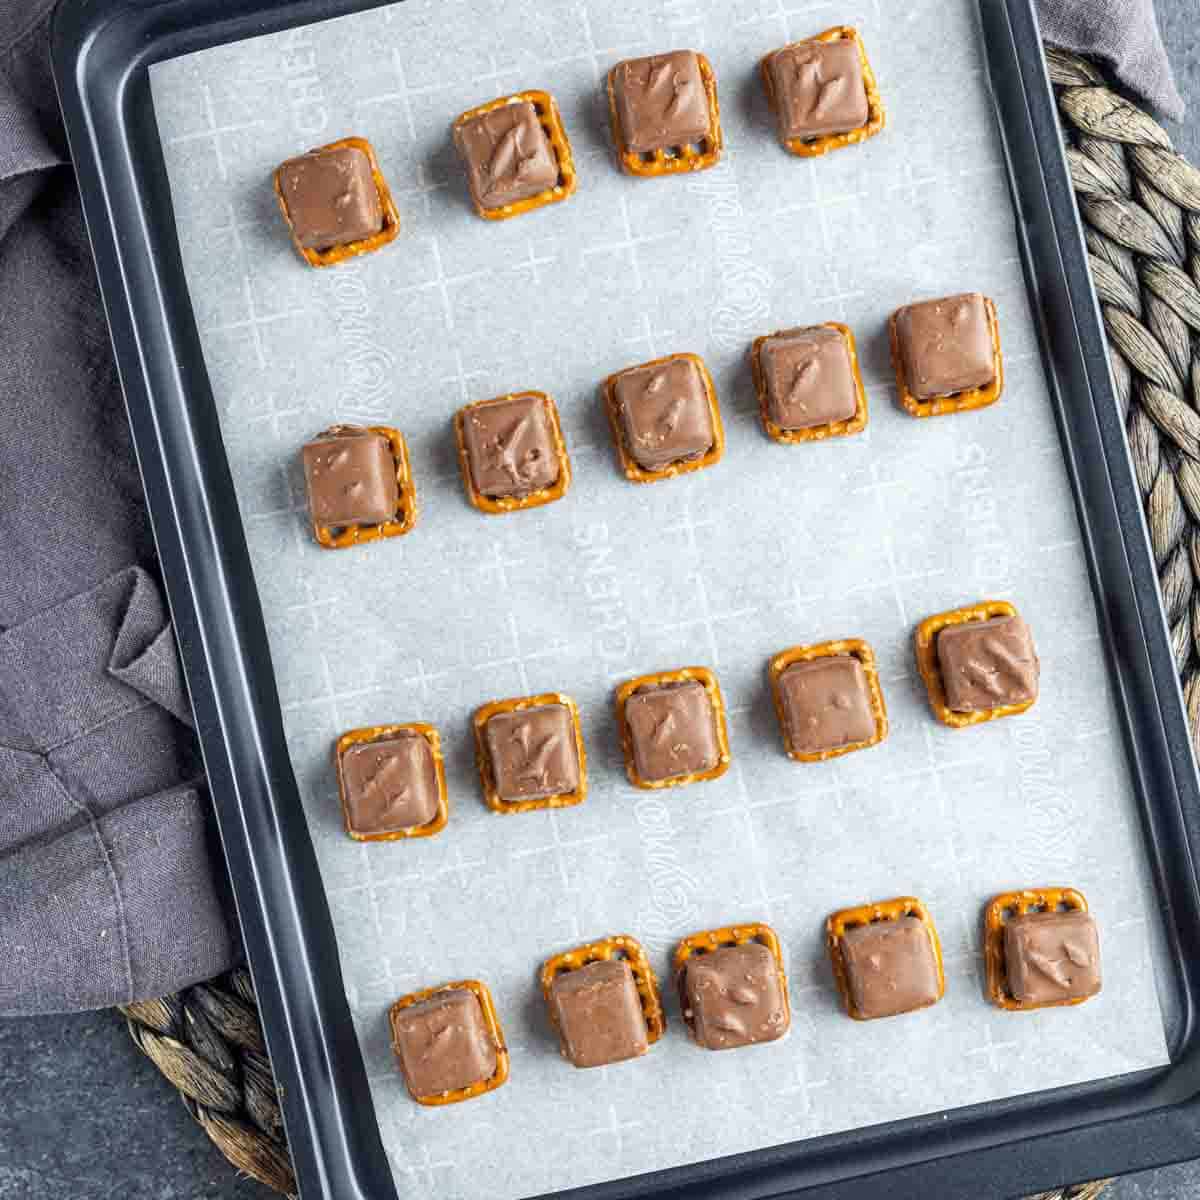 Snickers Pretzel Bites on a baking sheet.